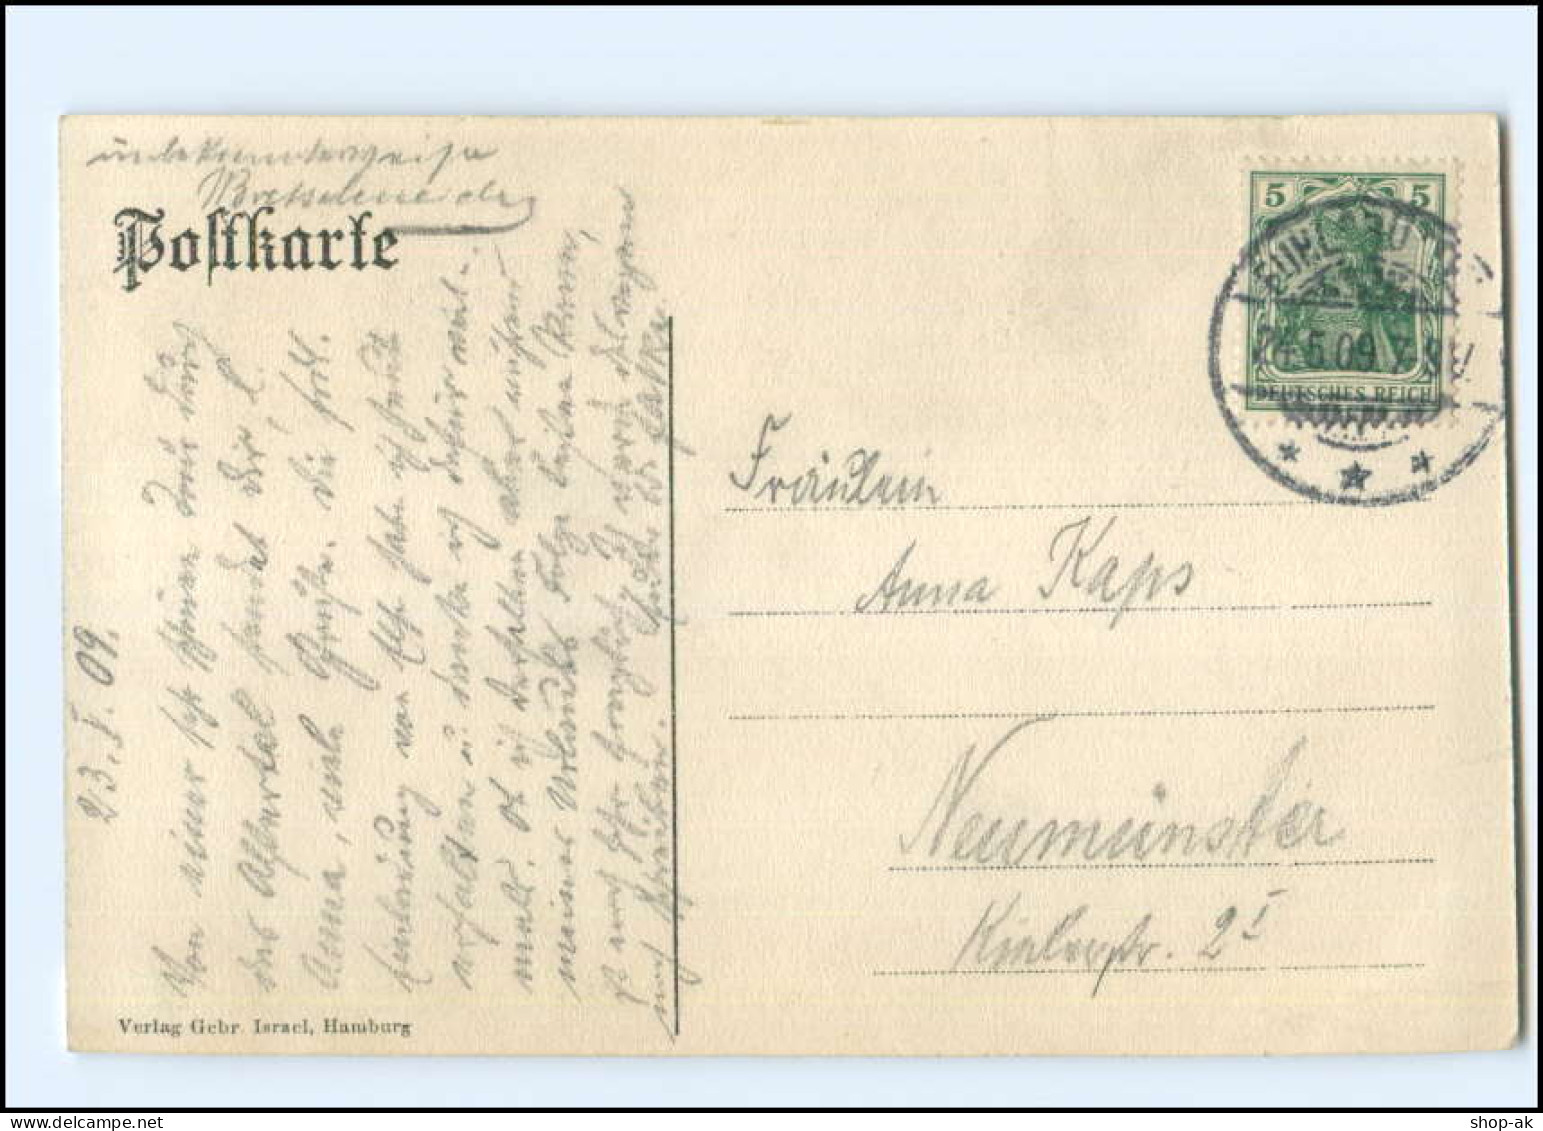 XX10243/ Hamburg Fuhlsbüttel  Alster-Park, Fischteiche AK 1909 - Nord